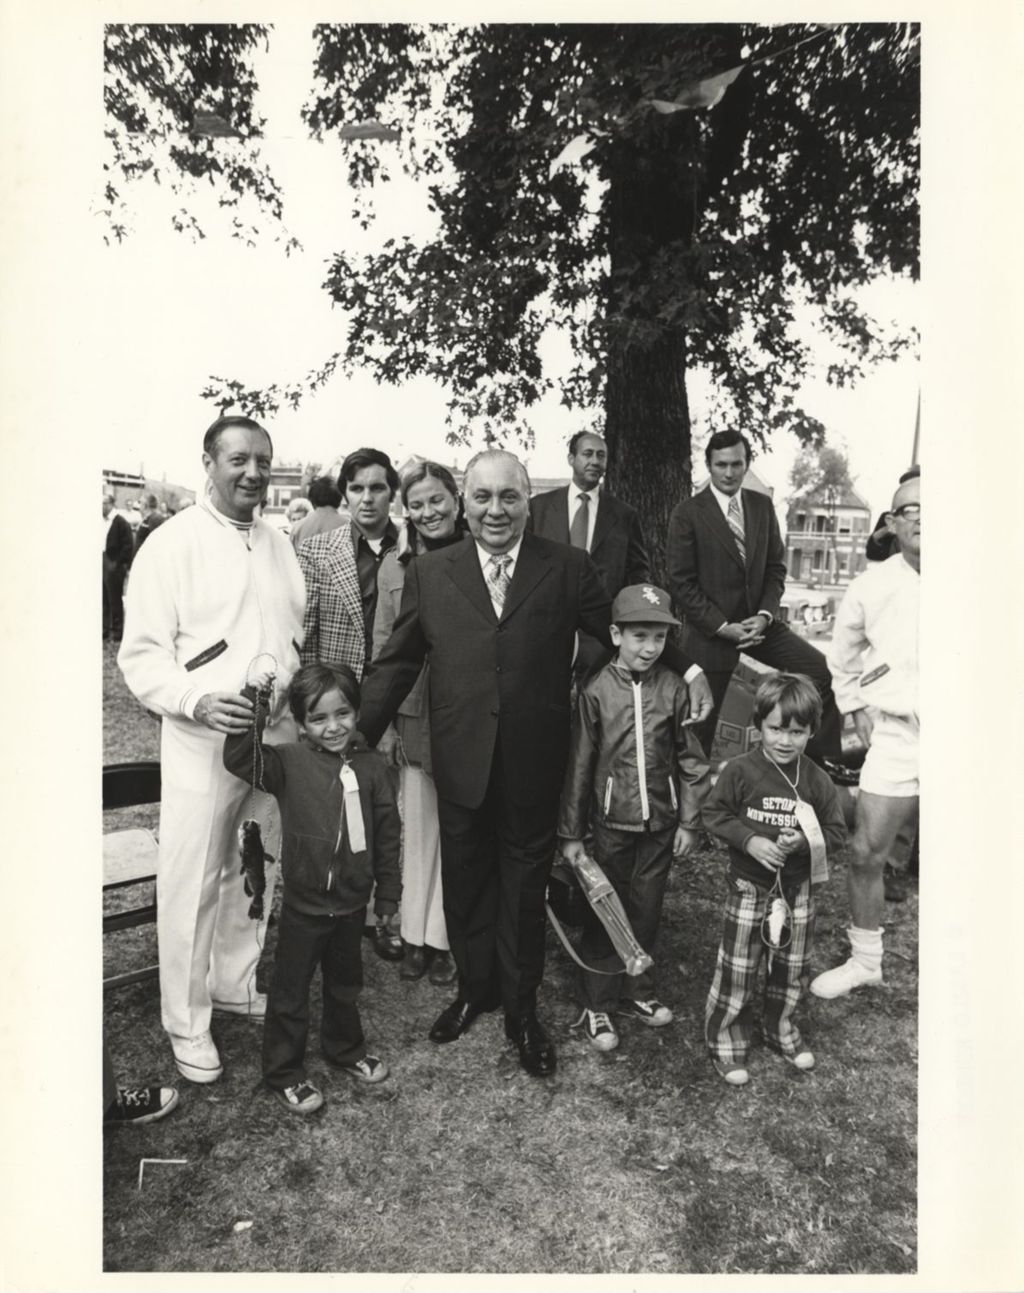 Richard J. Daley, Michael Bilandic and others at a Fish Derby